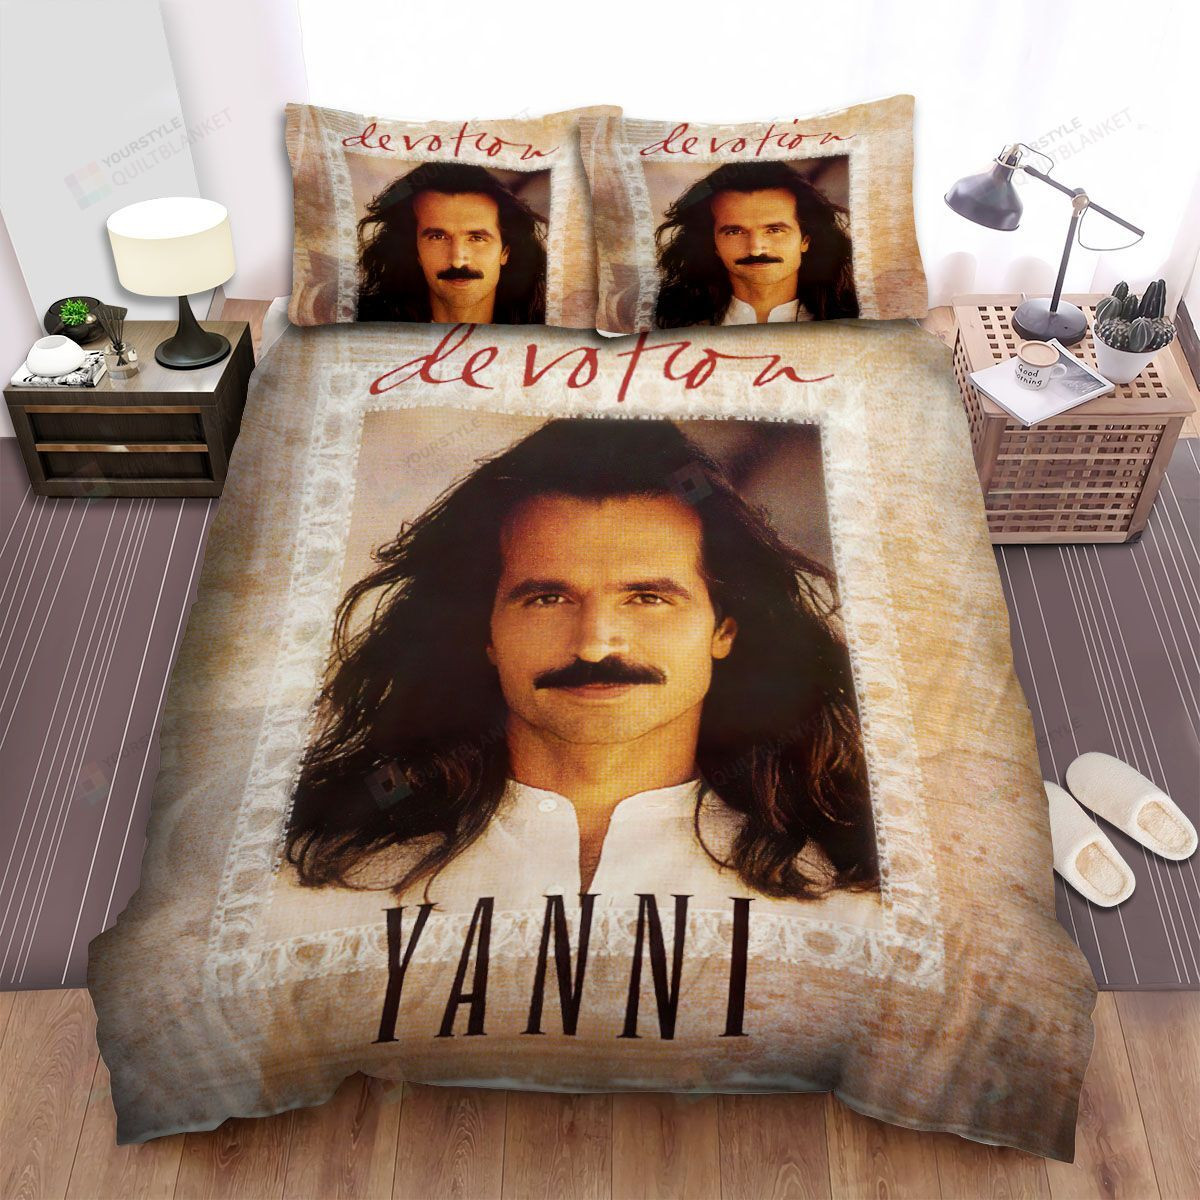 Yanni Devotion Album Cover Bed Sheets Spread Comforter Duvet Cover Bedding Sets